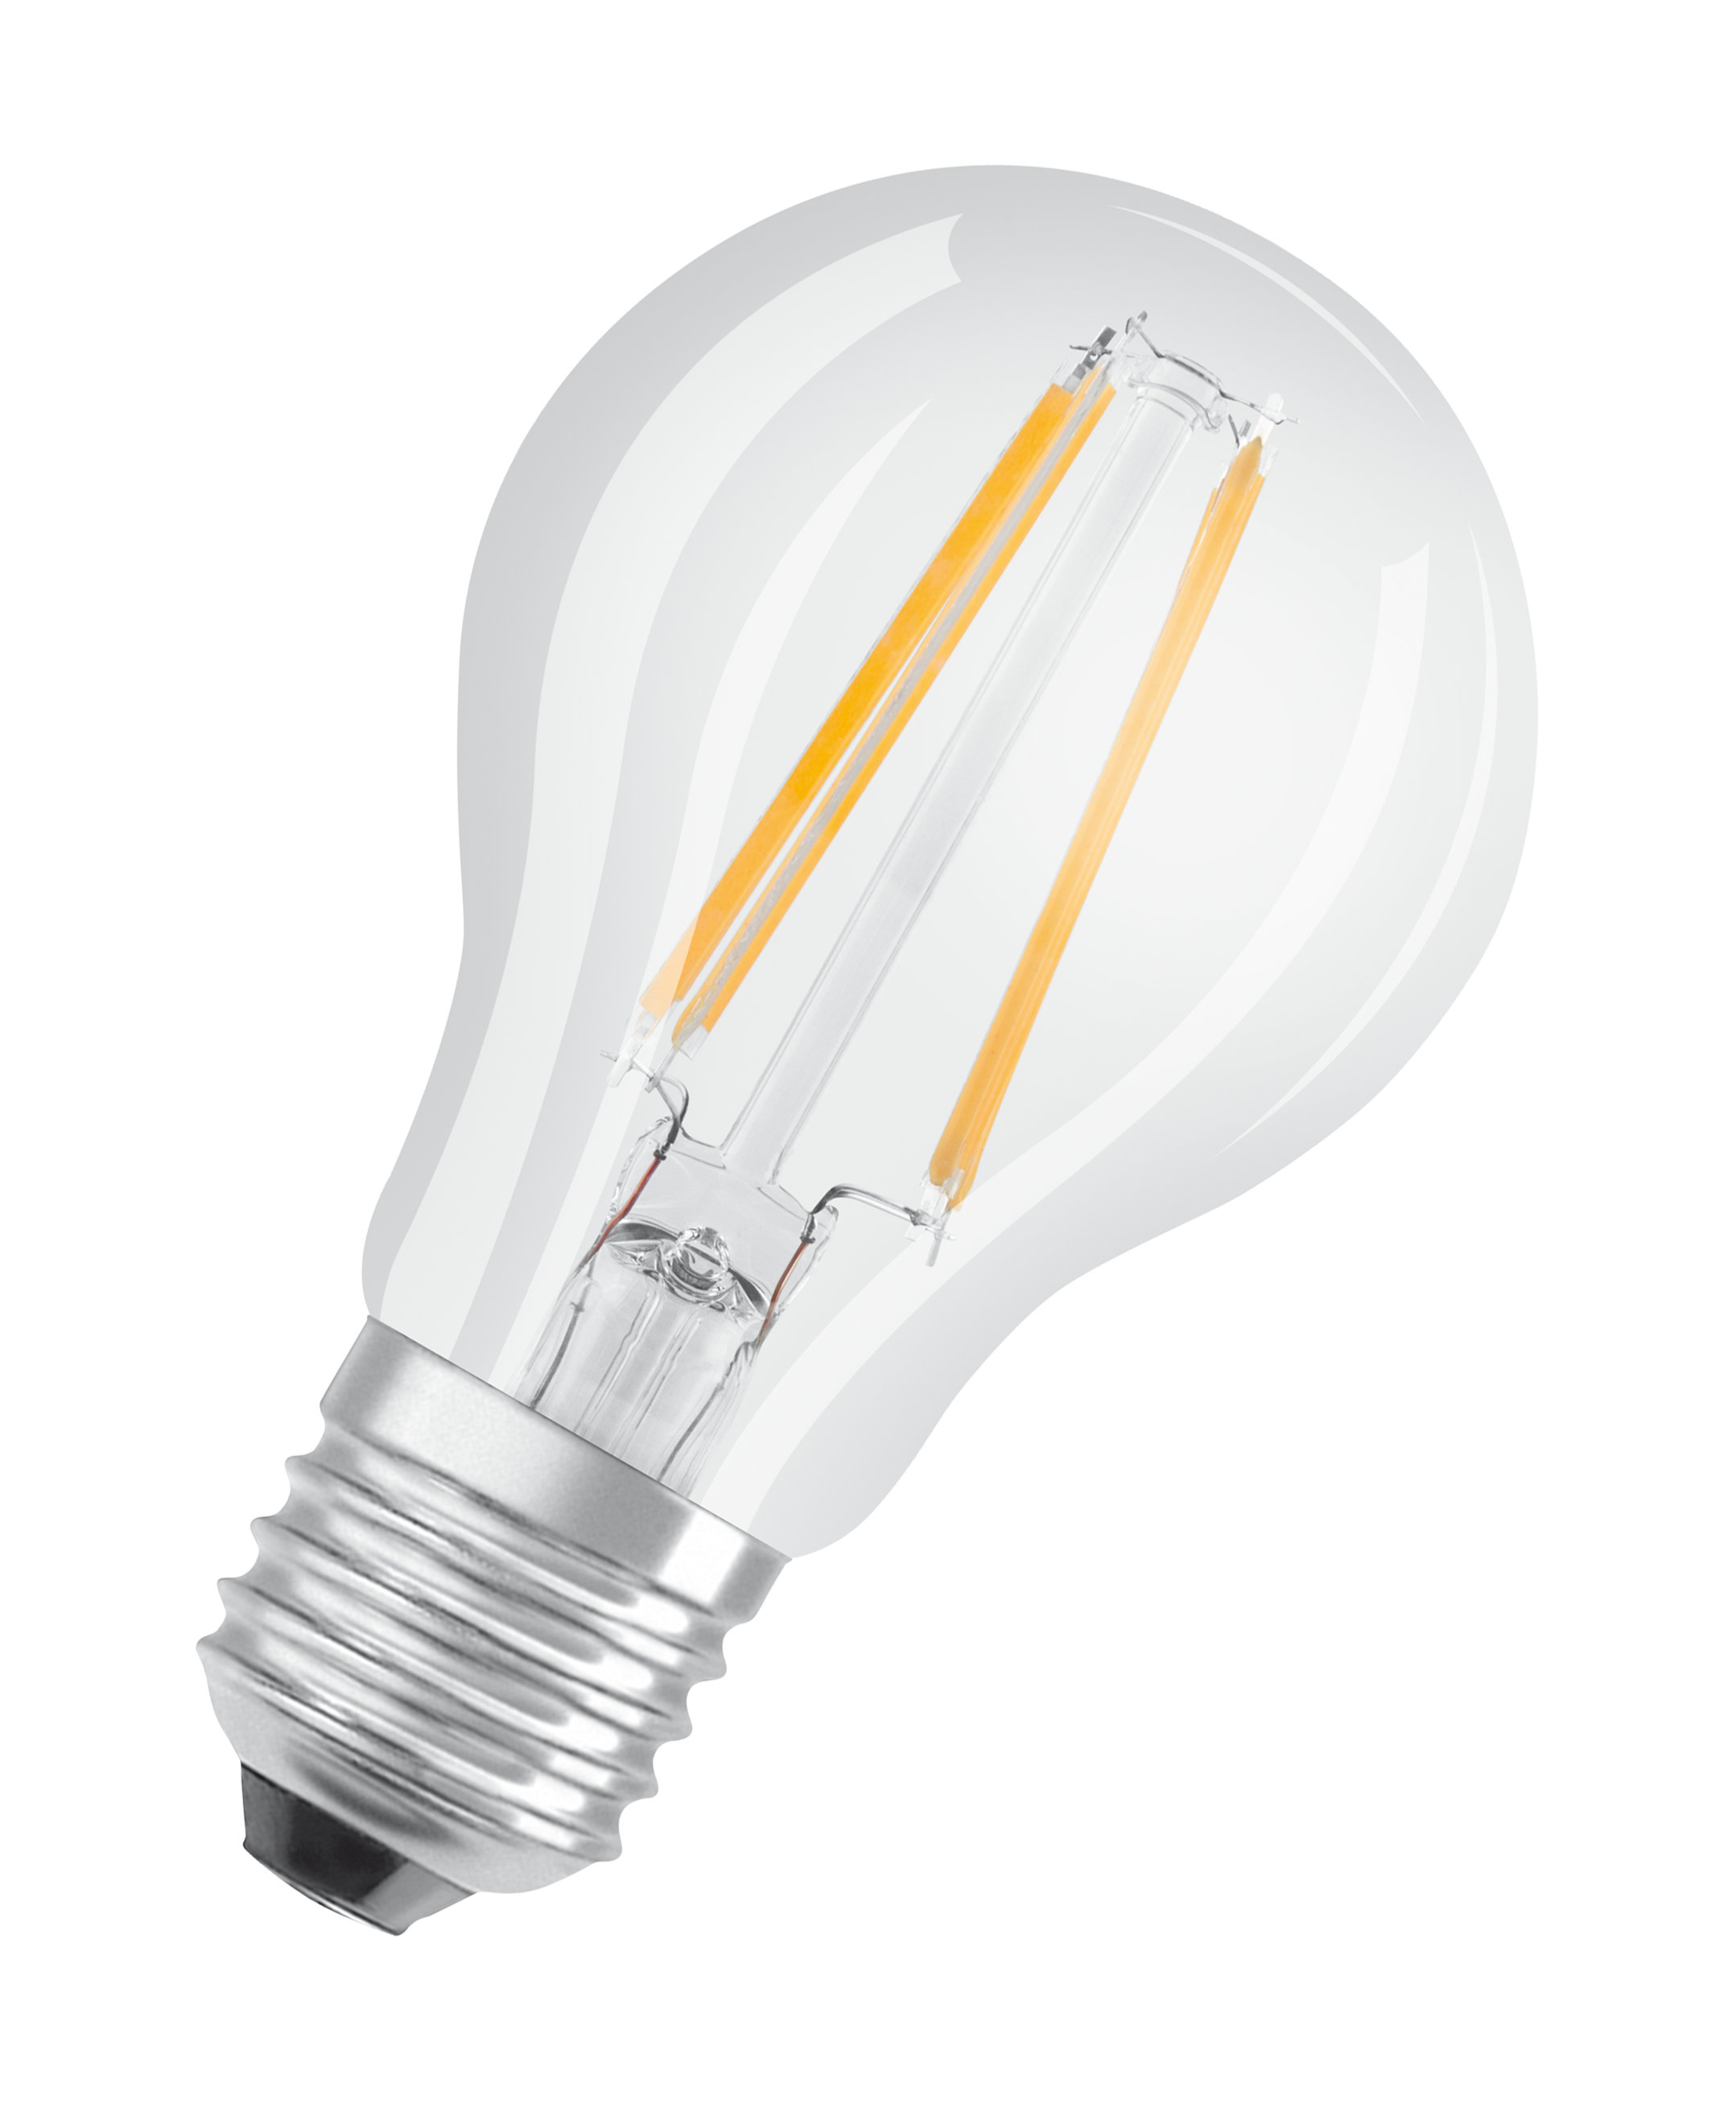 SENSOR DAYLIGHT LED A Kaltweiß Lumen CLASSIC Lampe OSRAM  LED 806